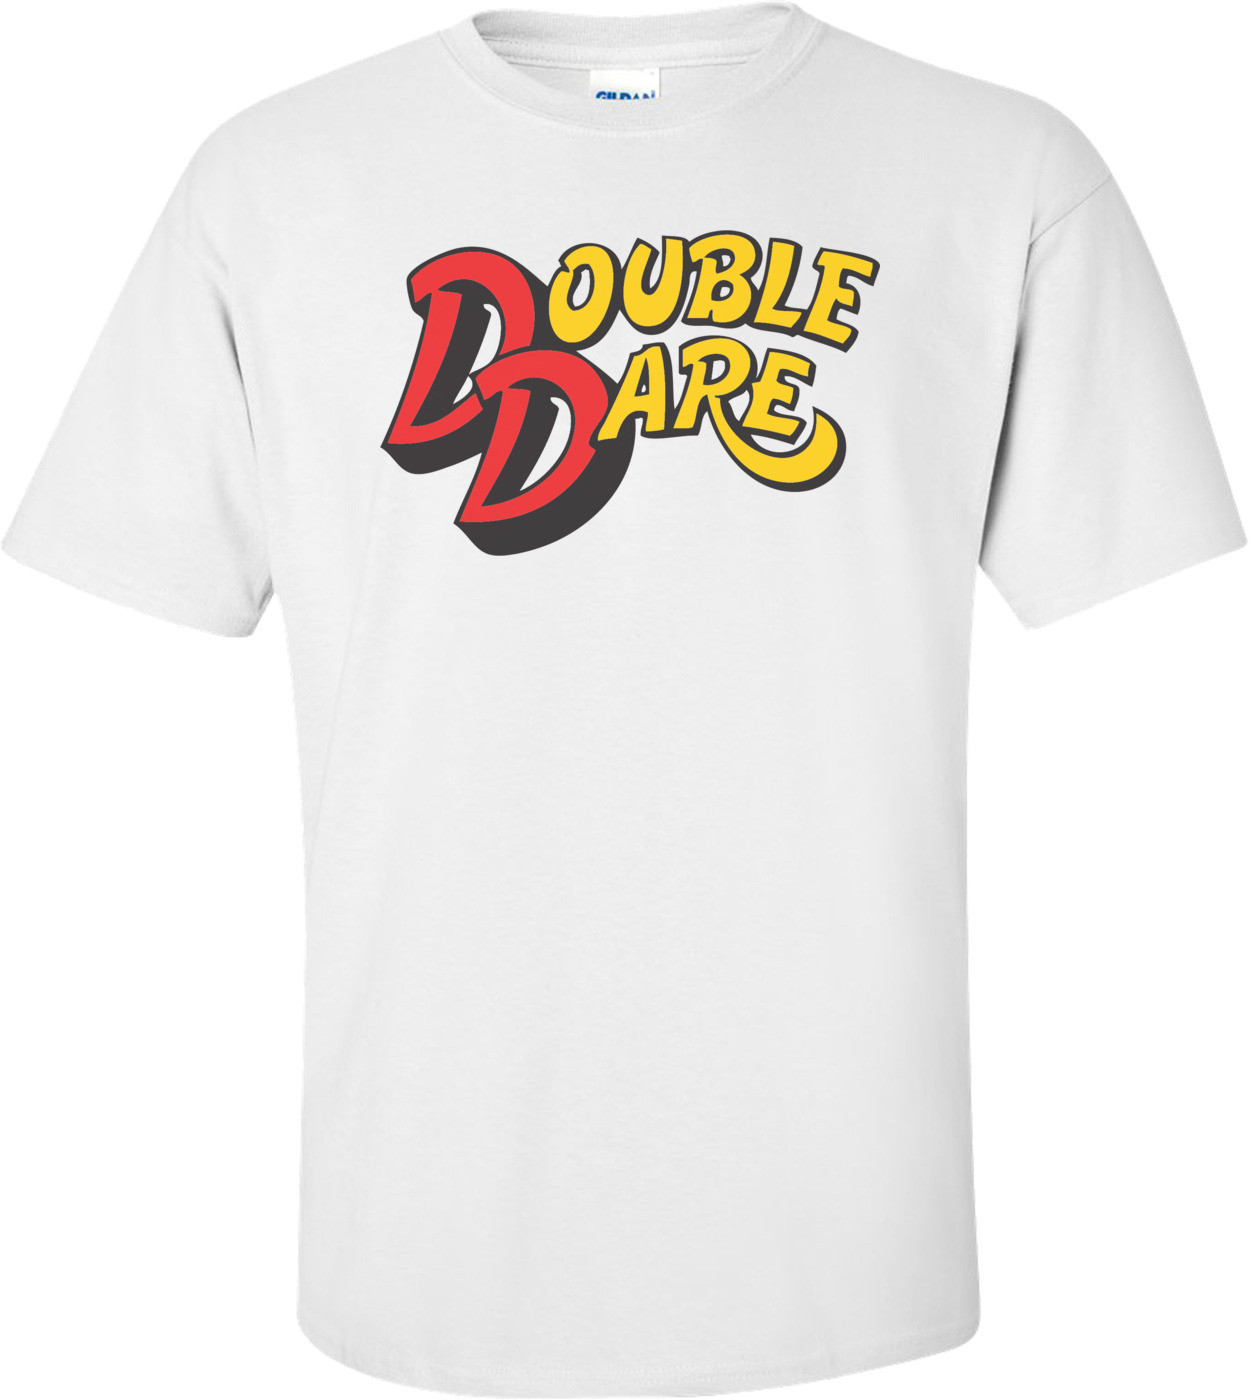 Double Dare T-shirt